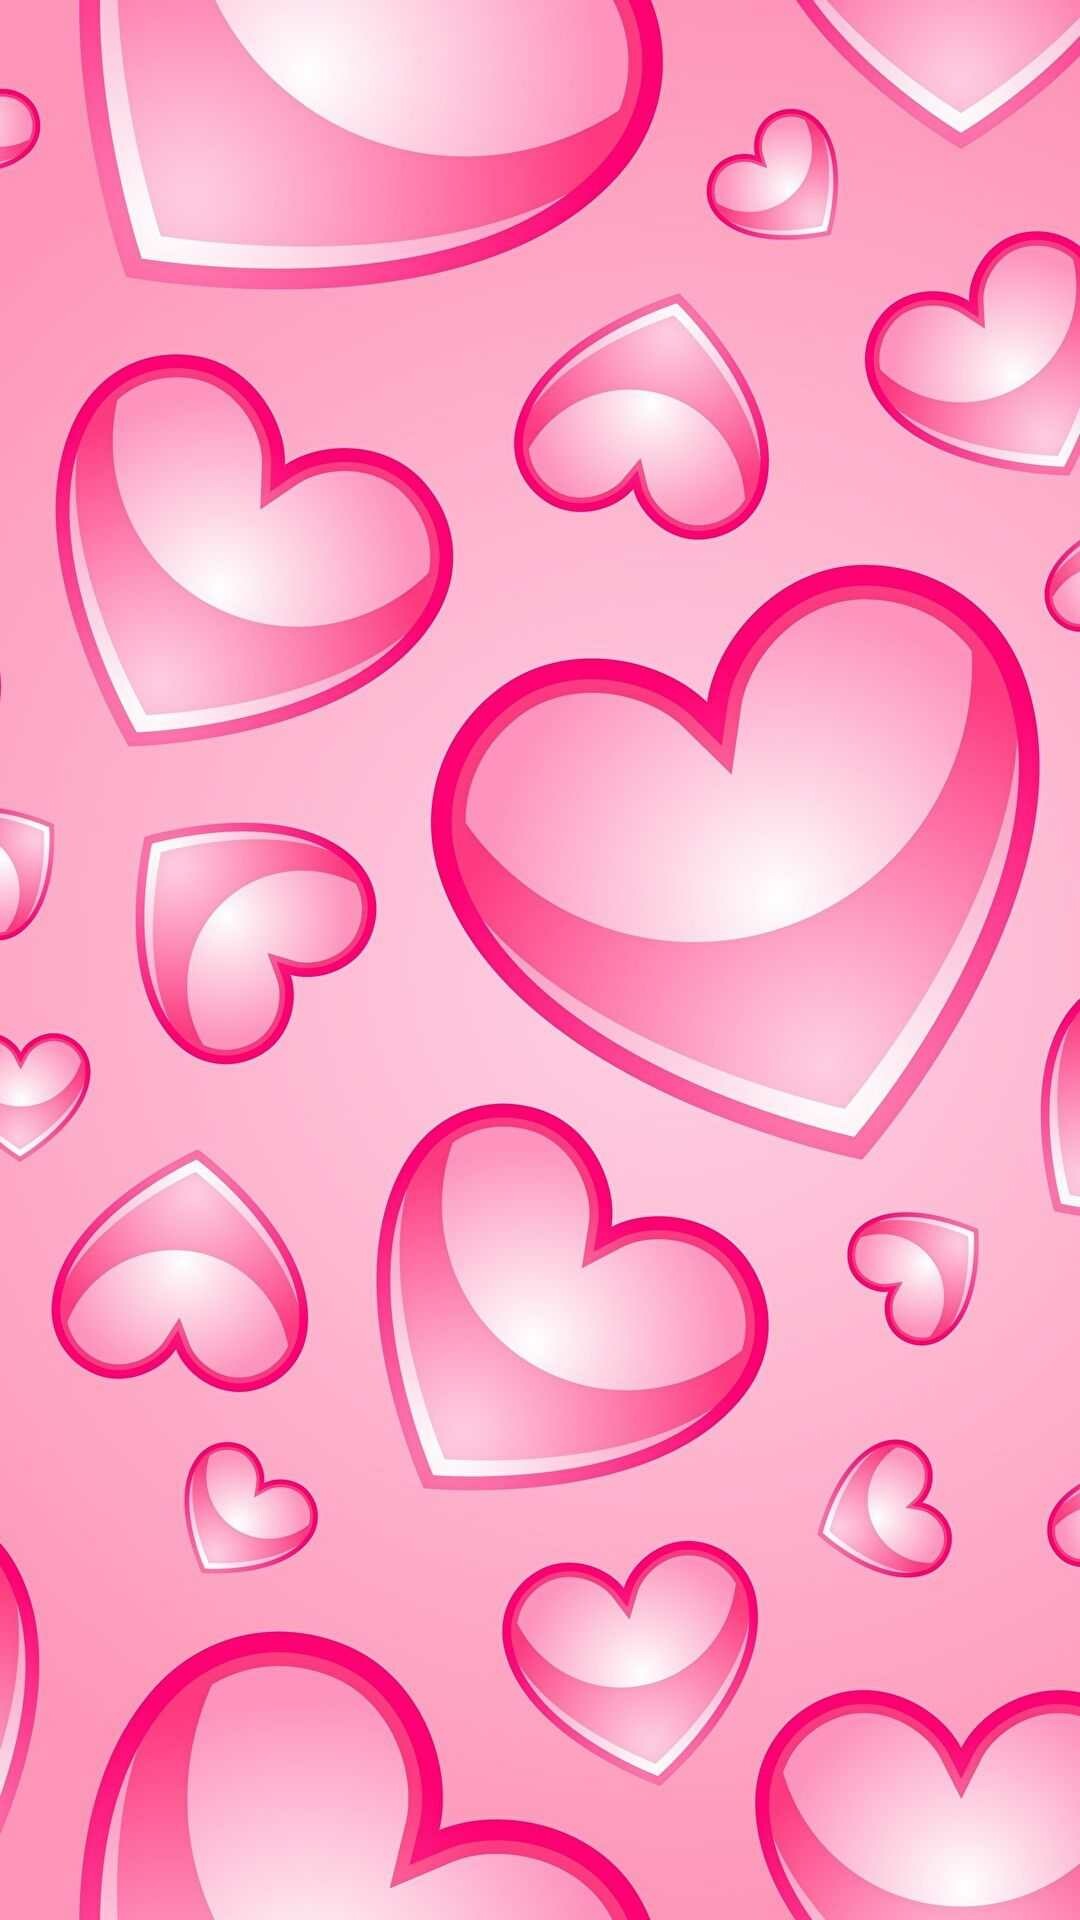 Heart: Love art, Symbol, Love card, St. Valentine's. 1080x1920 Full HD Background.